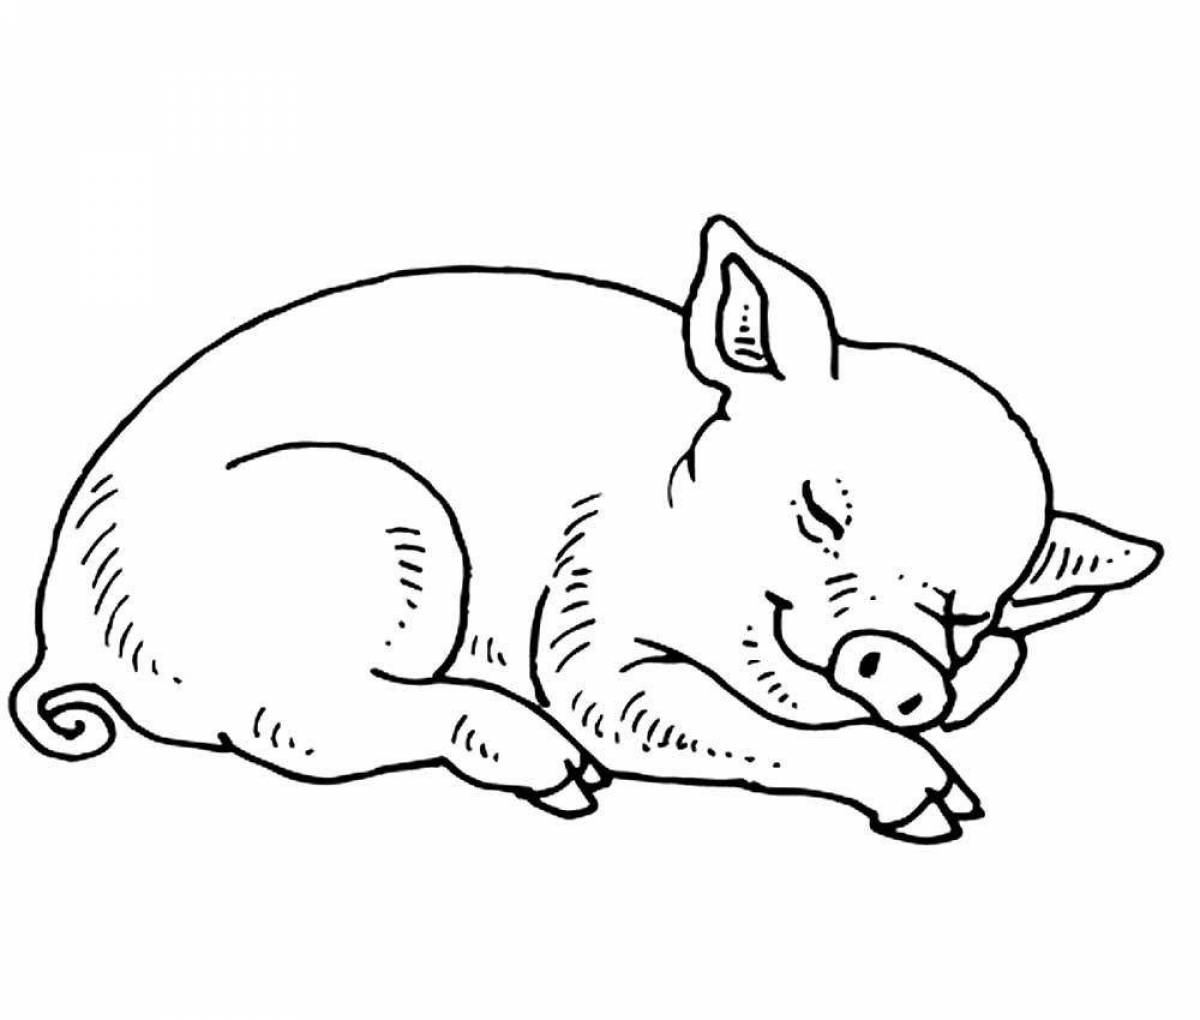 Fun coloring pig for kids